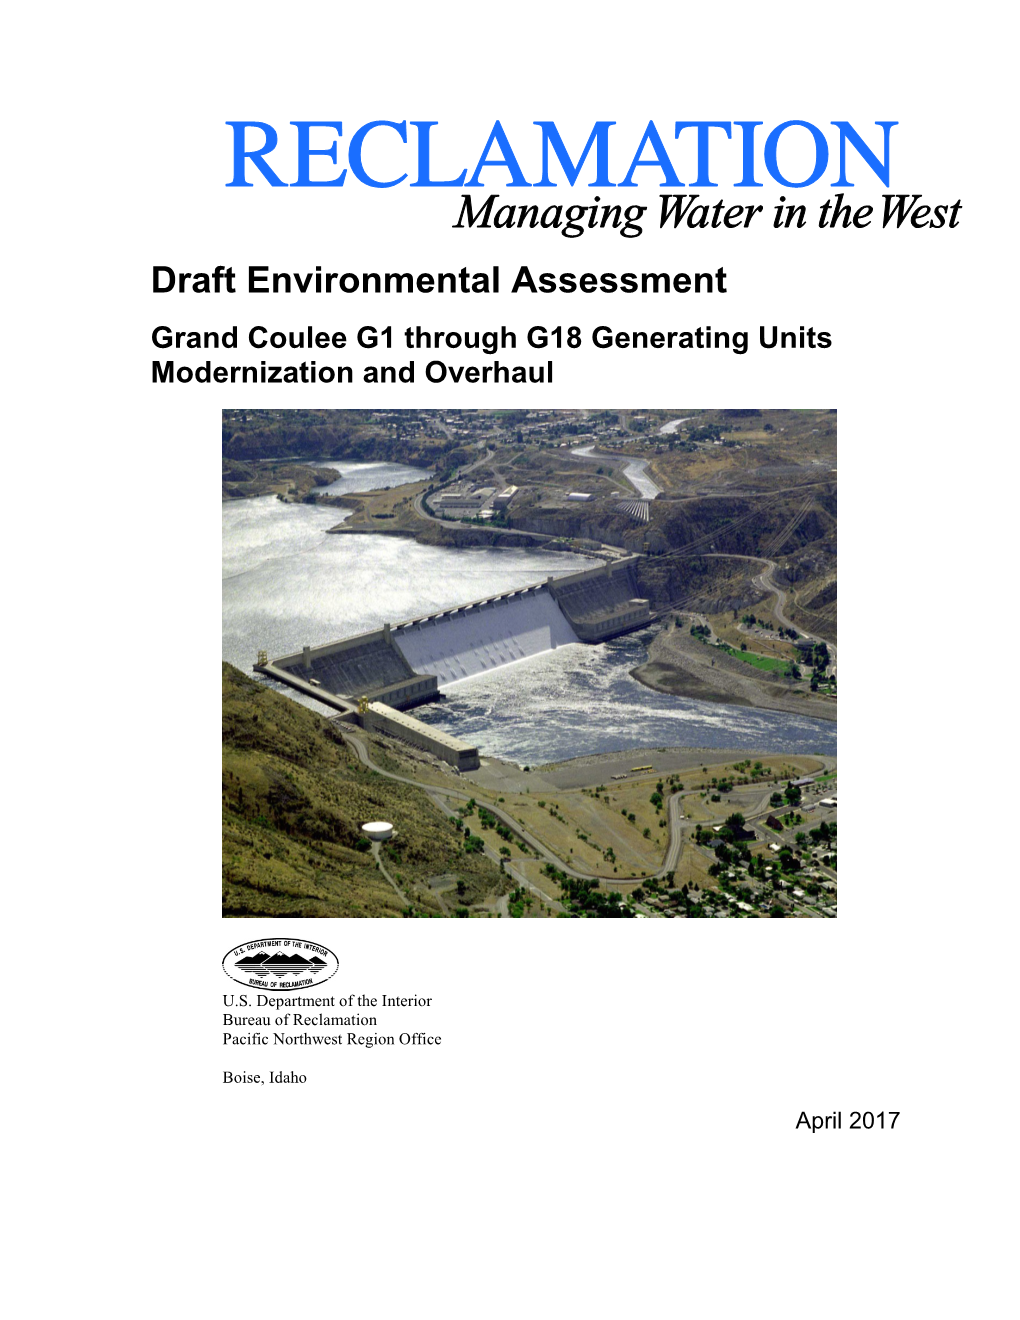 Draft Environmental Assessment, Grand Coulee G1 Through G18